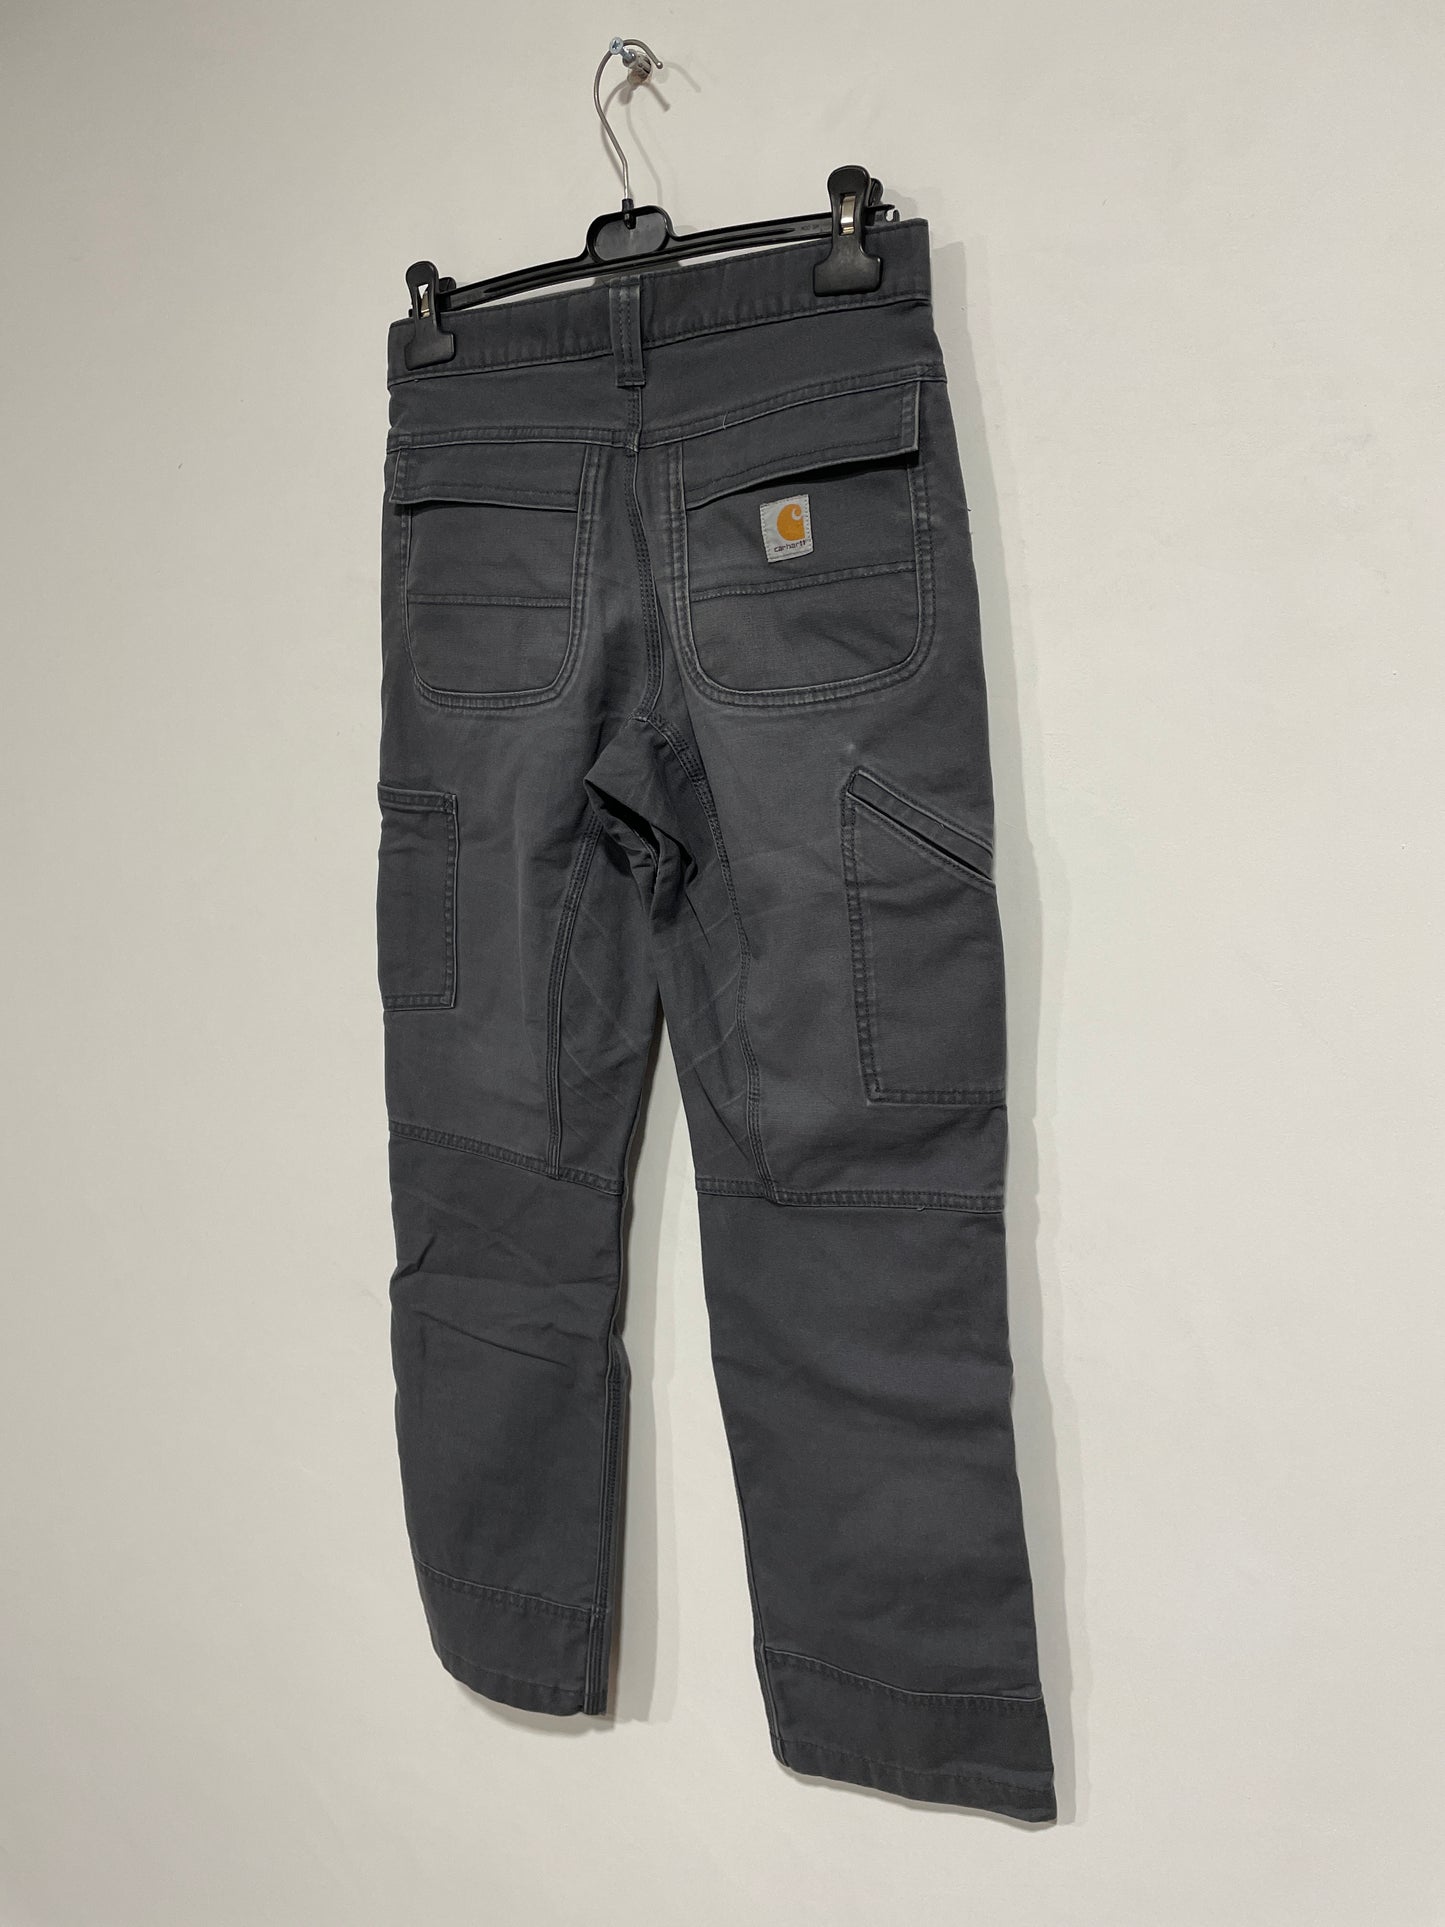 Jeans Carhartt double knee (A432)